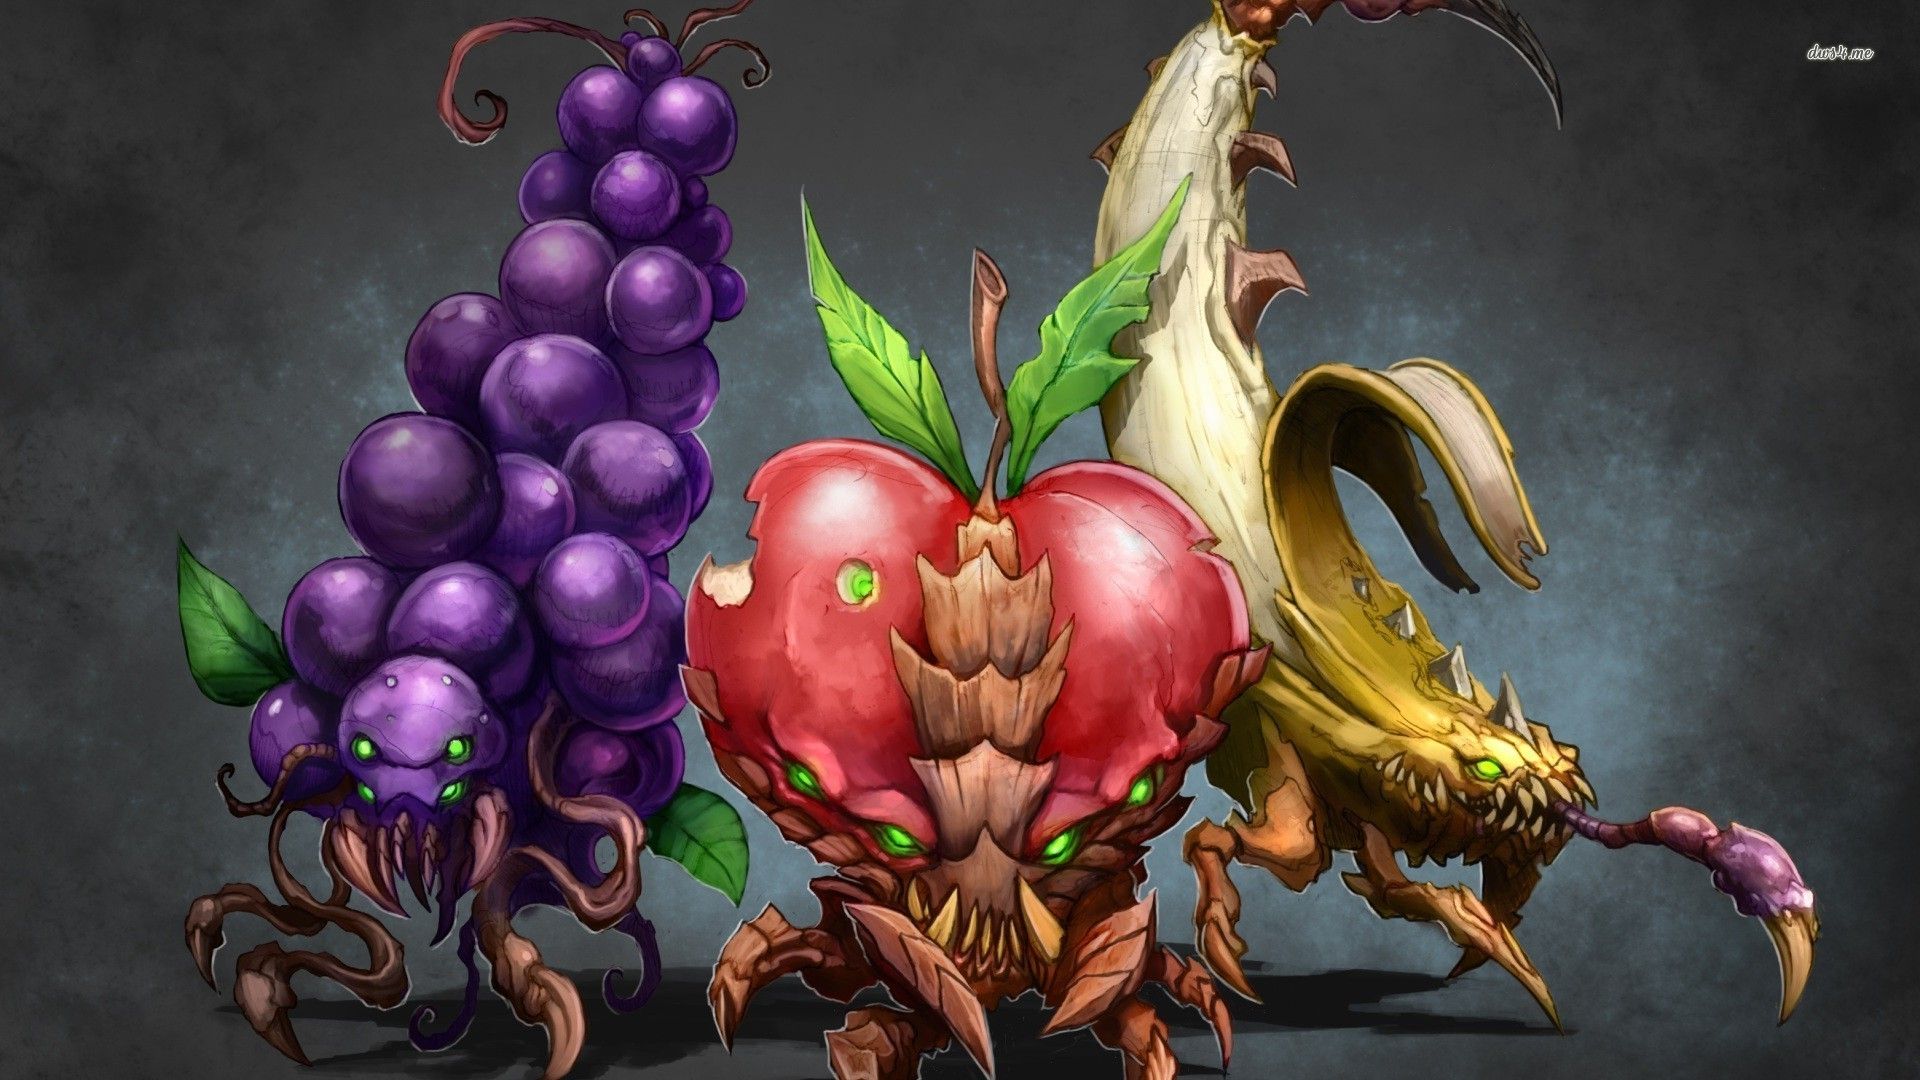 Fruit monsters wallpaper - Digital Art wallpapers - #5410